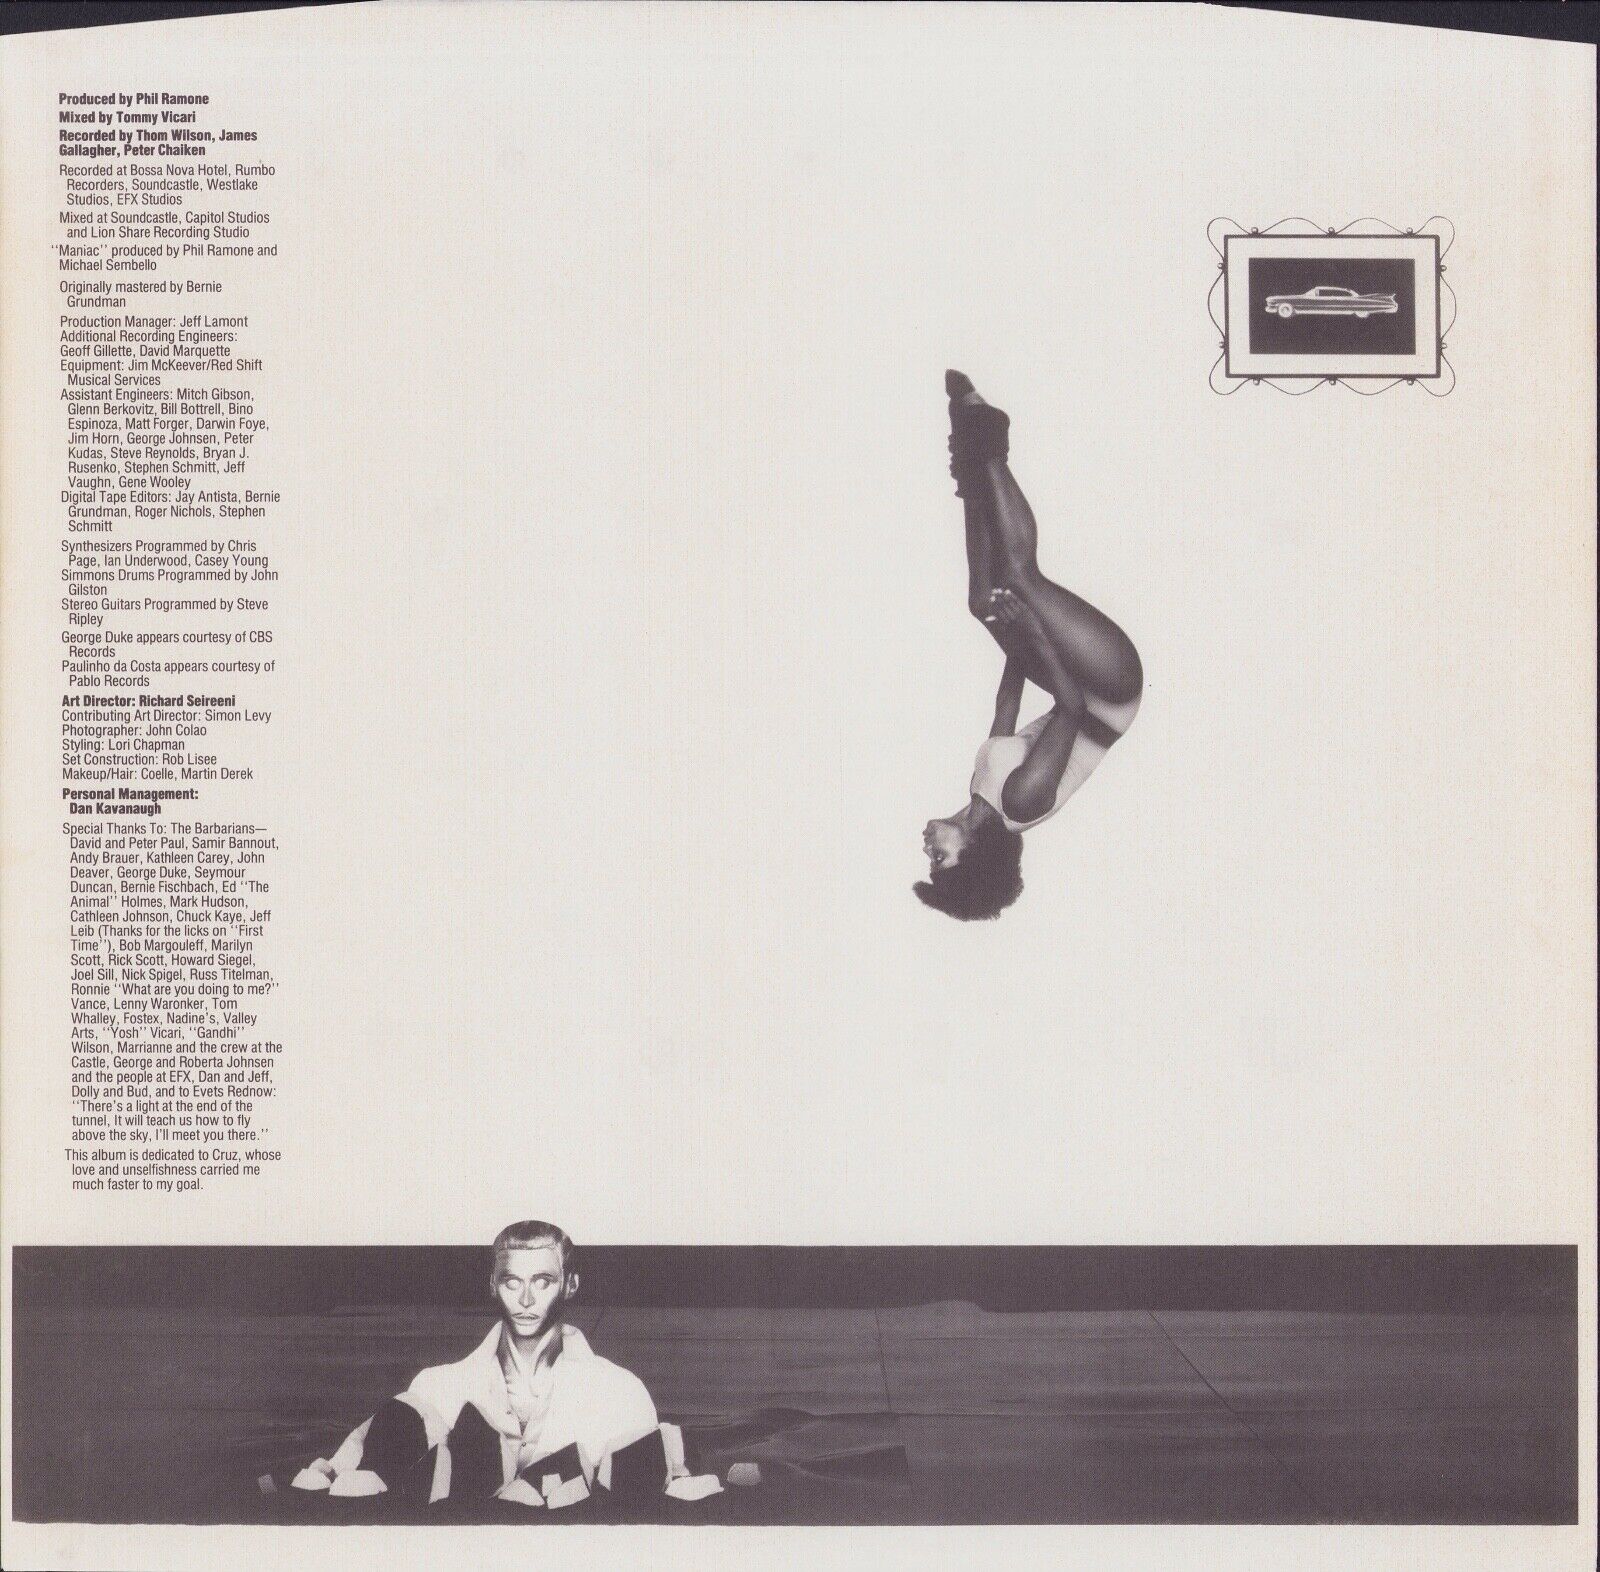 Michael Sembello ‎- Bossa Nova Hotel Vinyl LP